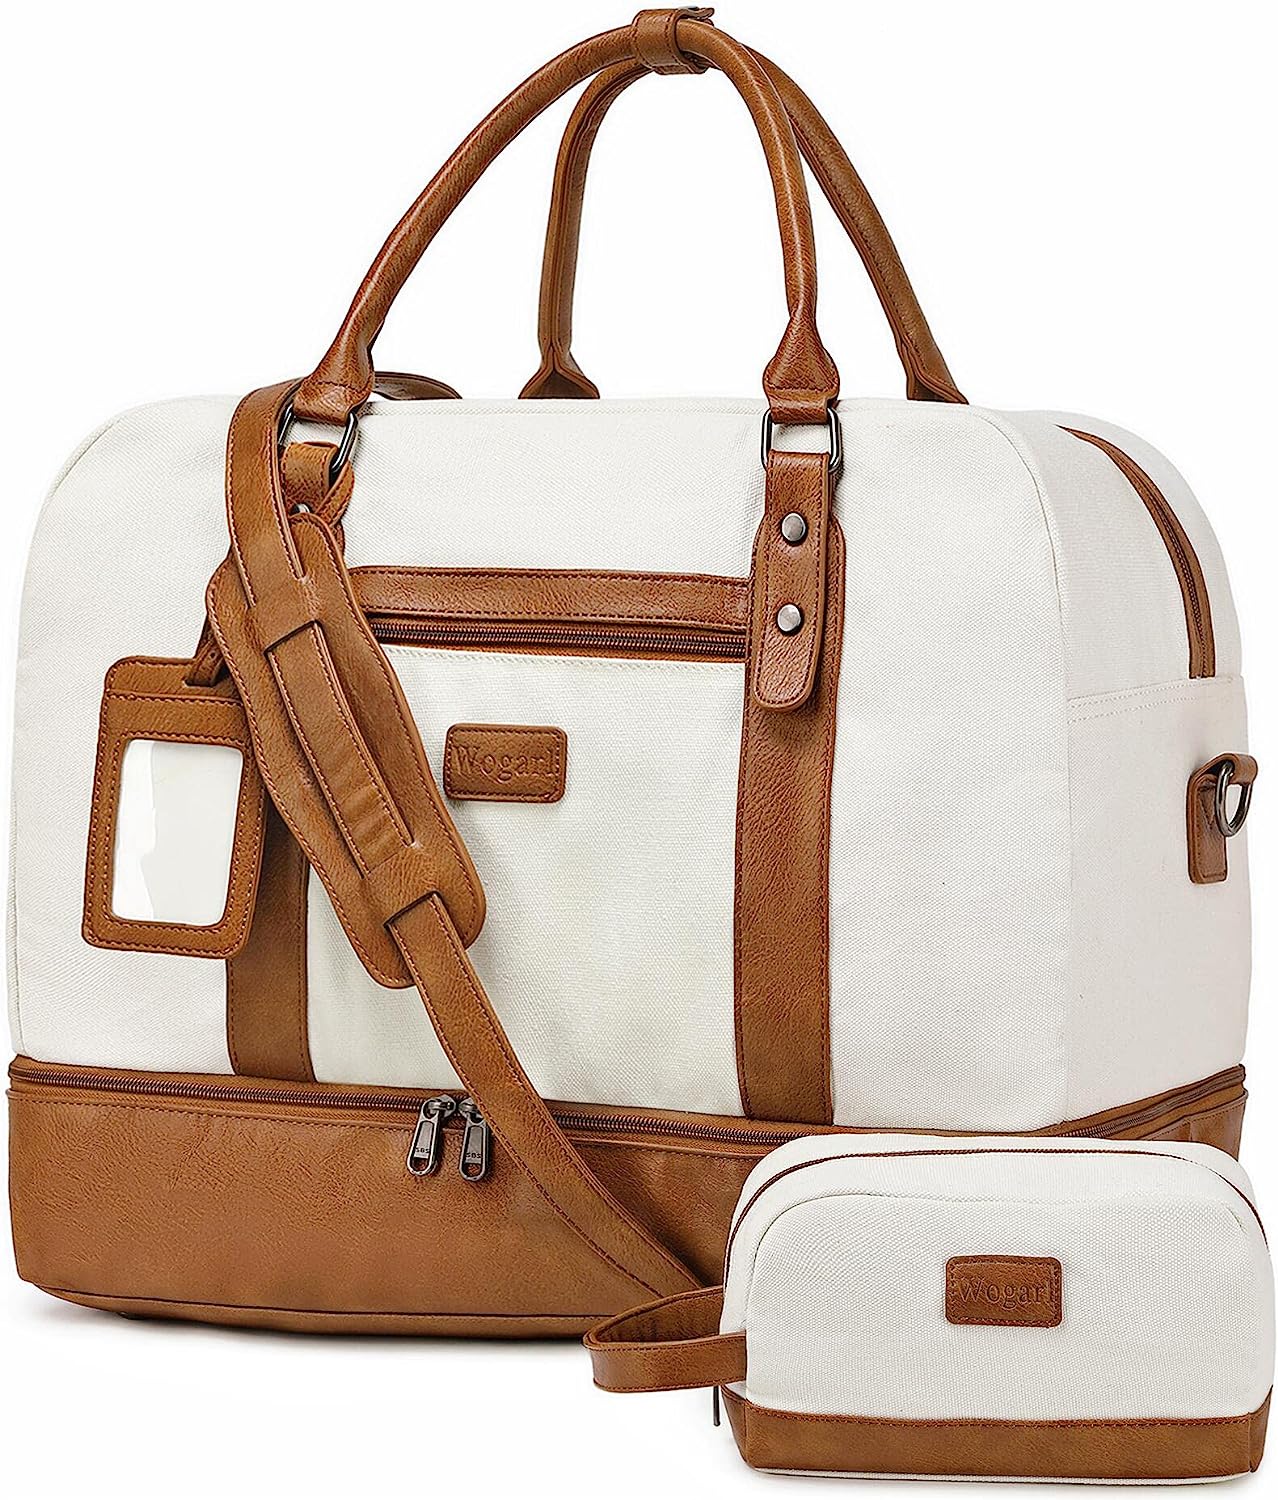 TWENTY FOUR Checkered Bag Travel Duffel Bag Weekend Overnight Luggage  Shoulder Bag For Men Women -Black 